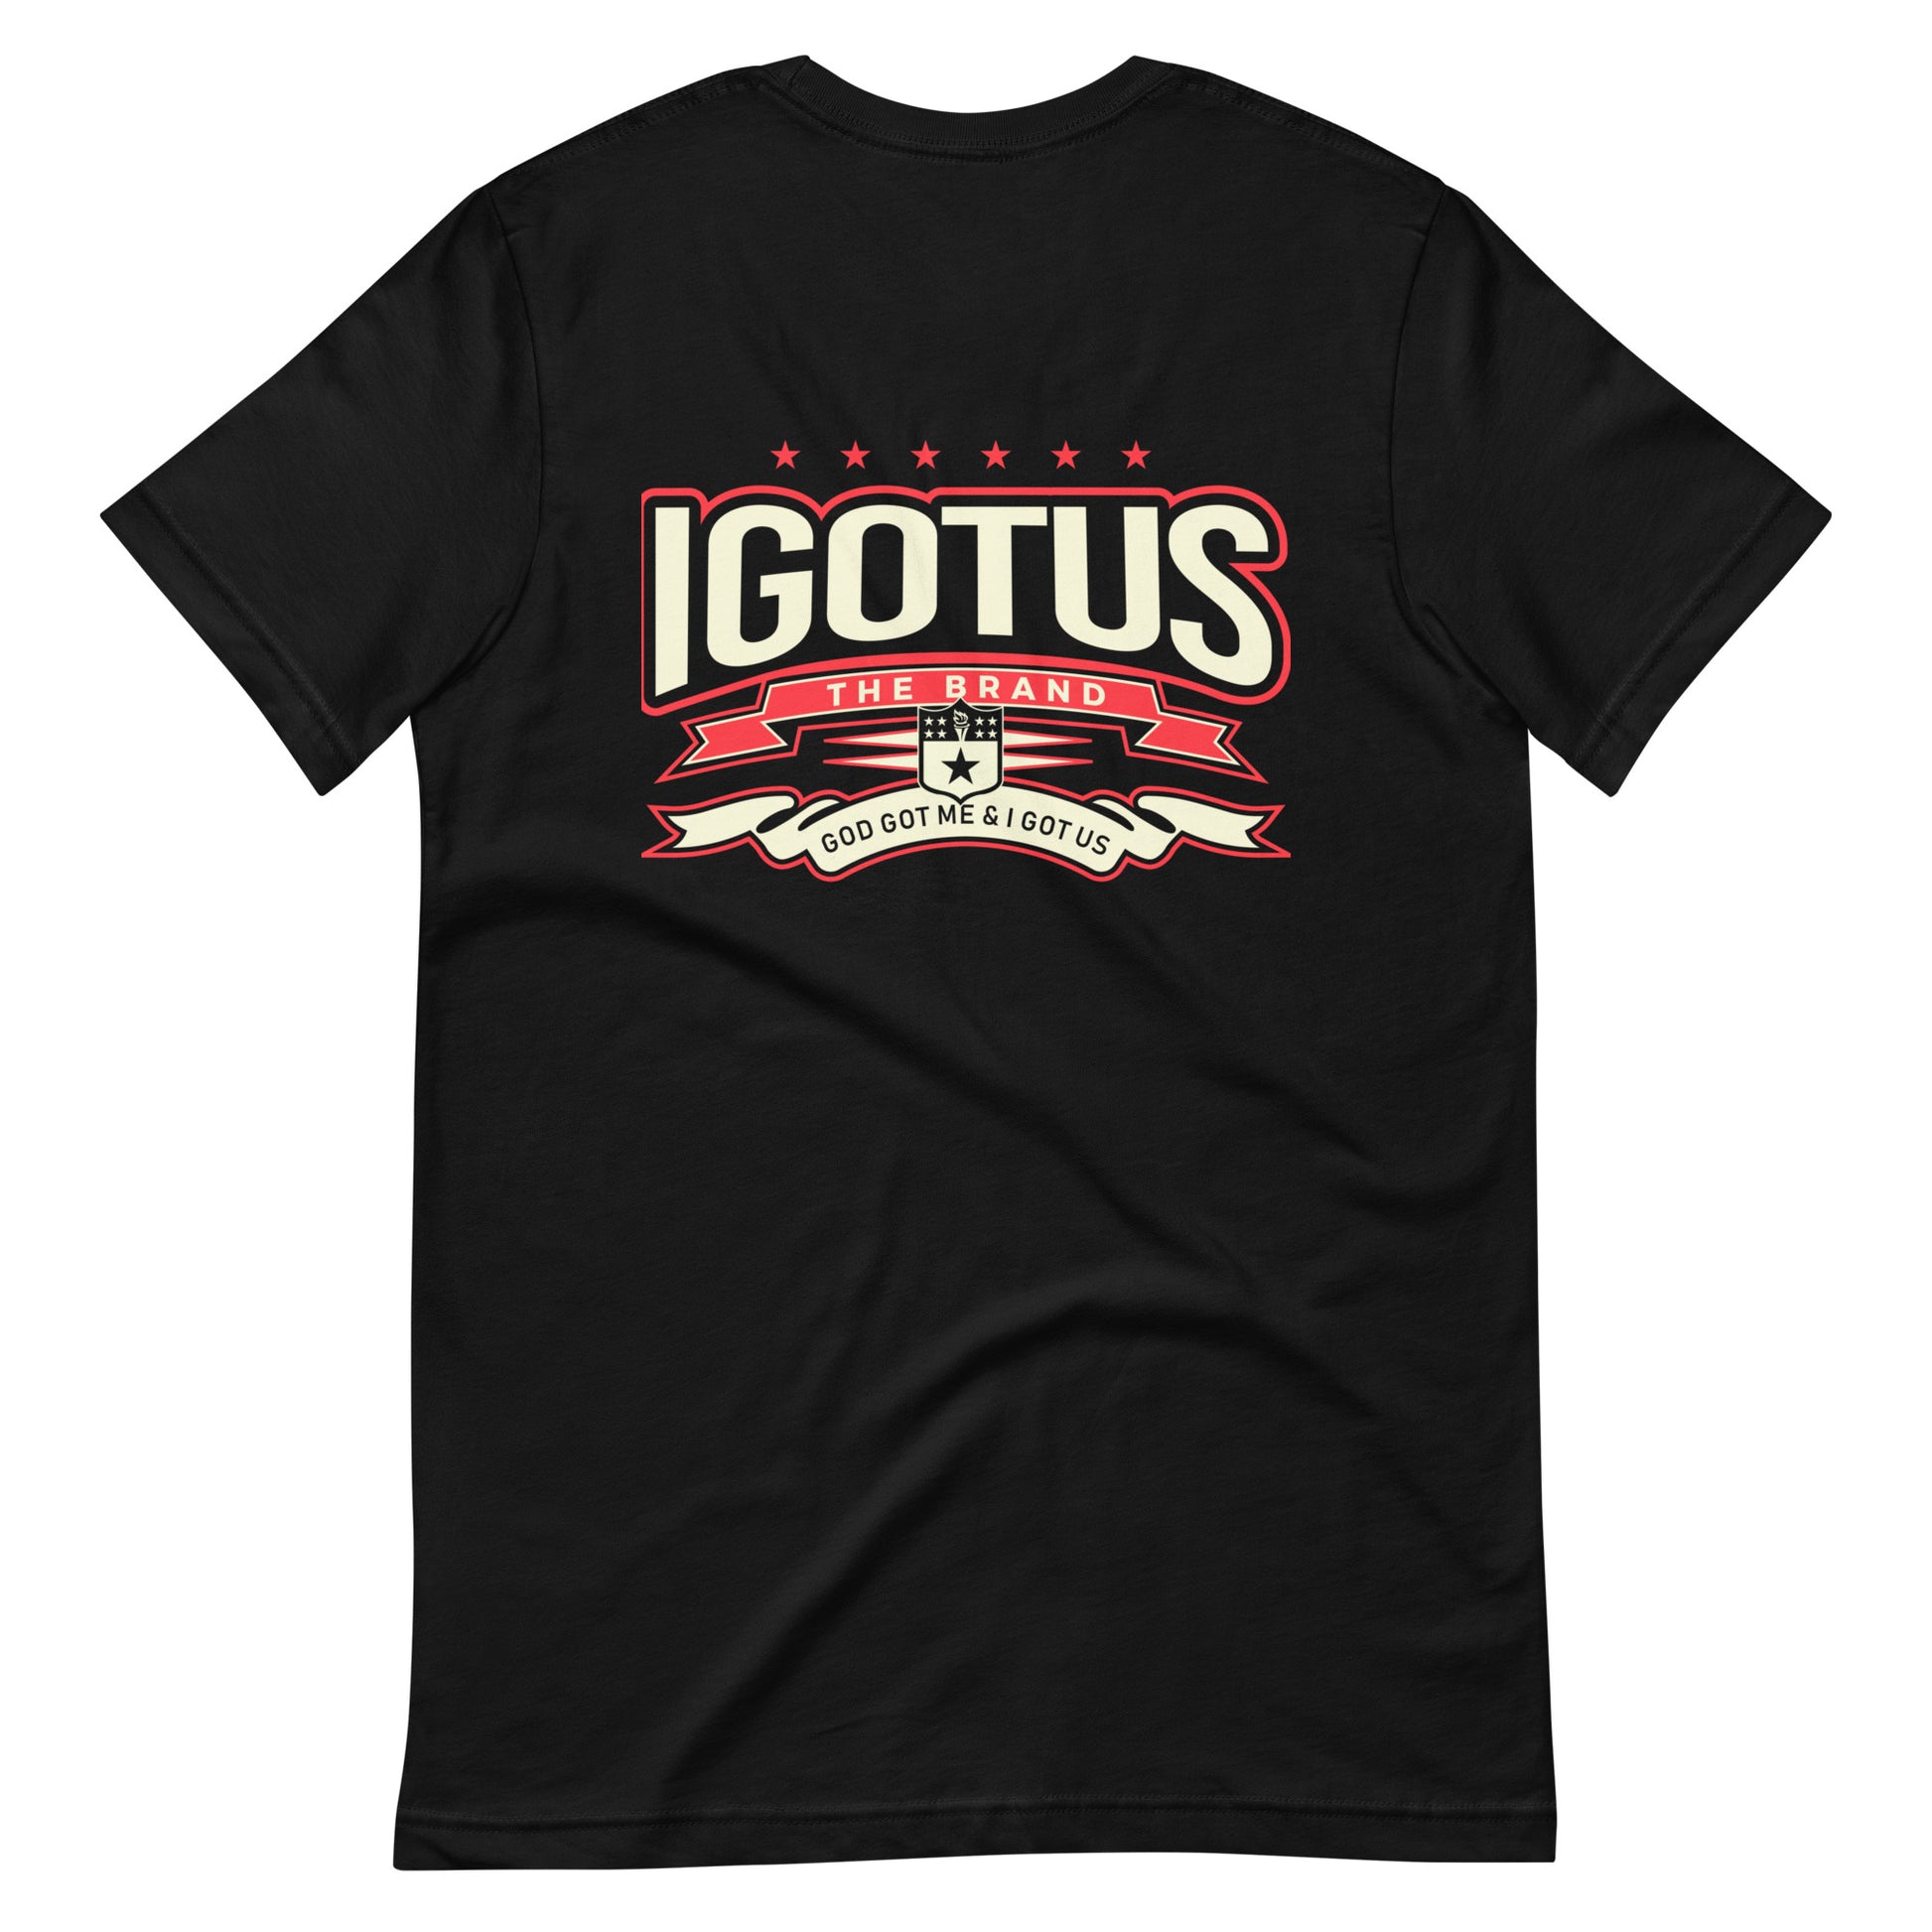 IGOTUS The Brand T-shirt - IGOTUS